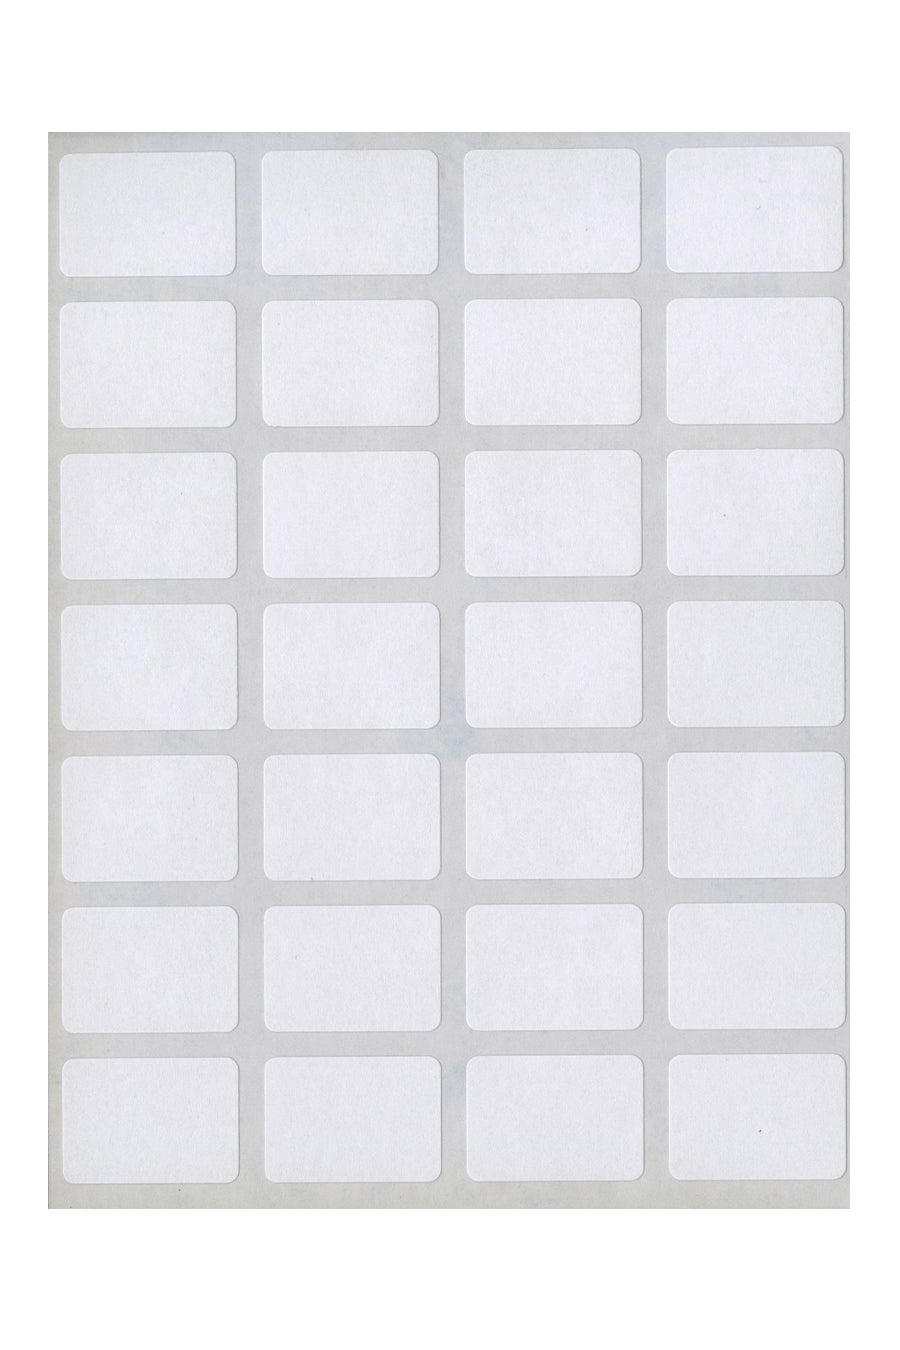 White Multi-Purpose Labels, 5/8" x 7/8", Rectangle, 1000/Bx